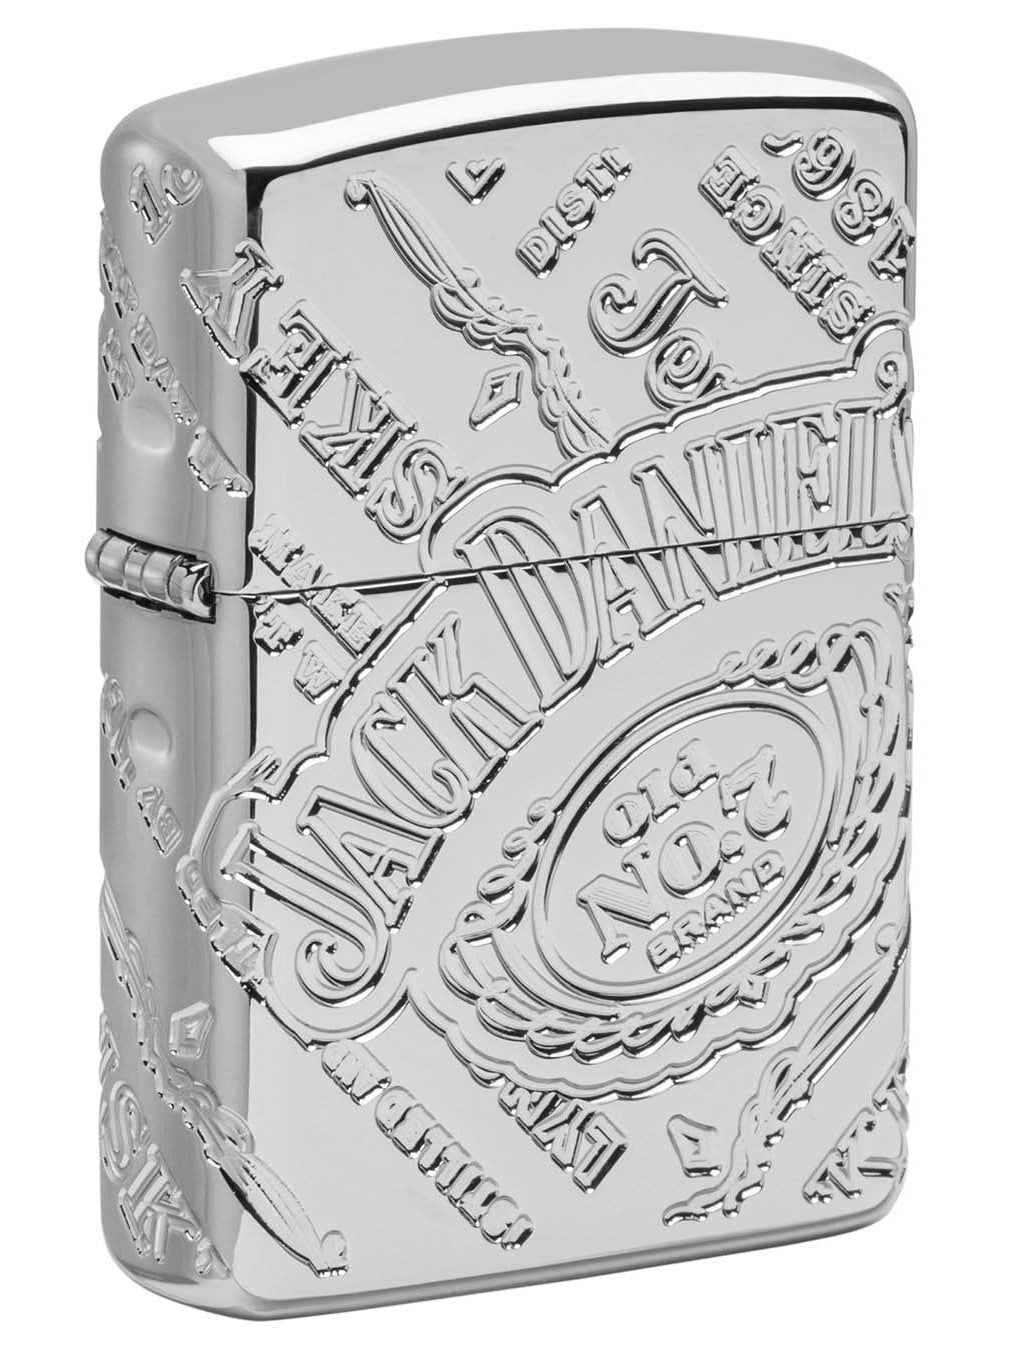 Zippo Lighter: Armor Jack Daniel's MultiCut - High Polish Chrome 49869